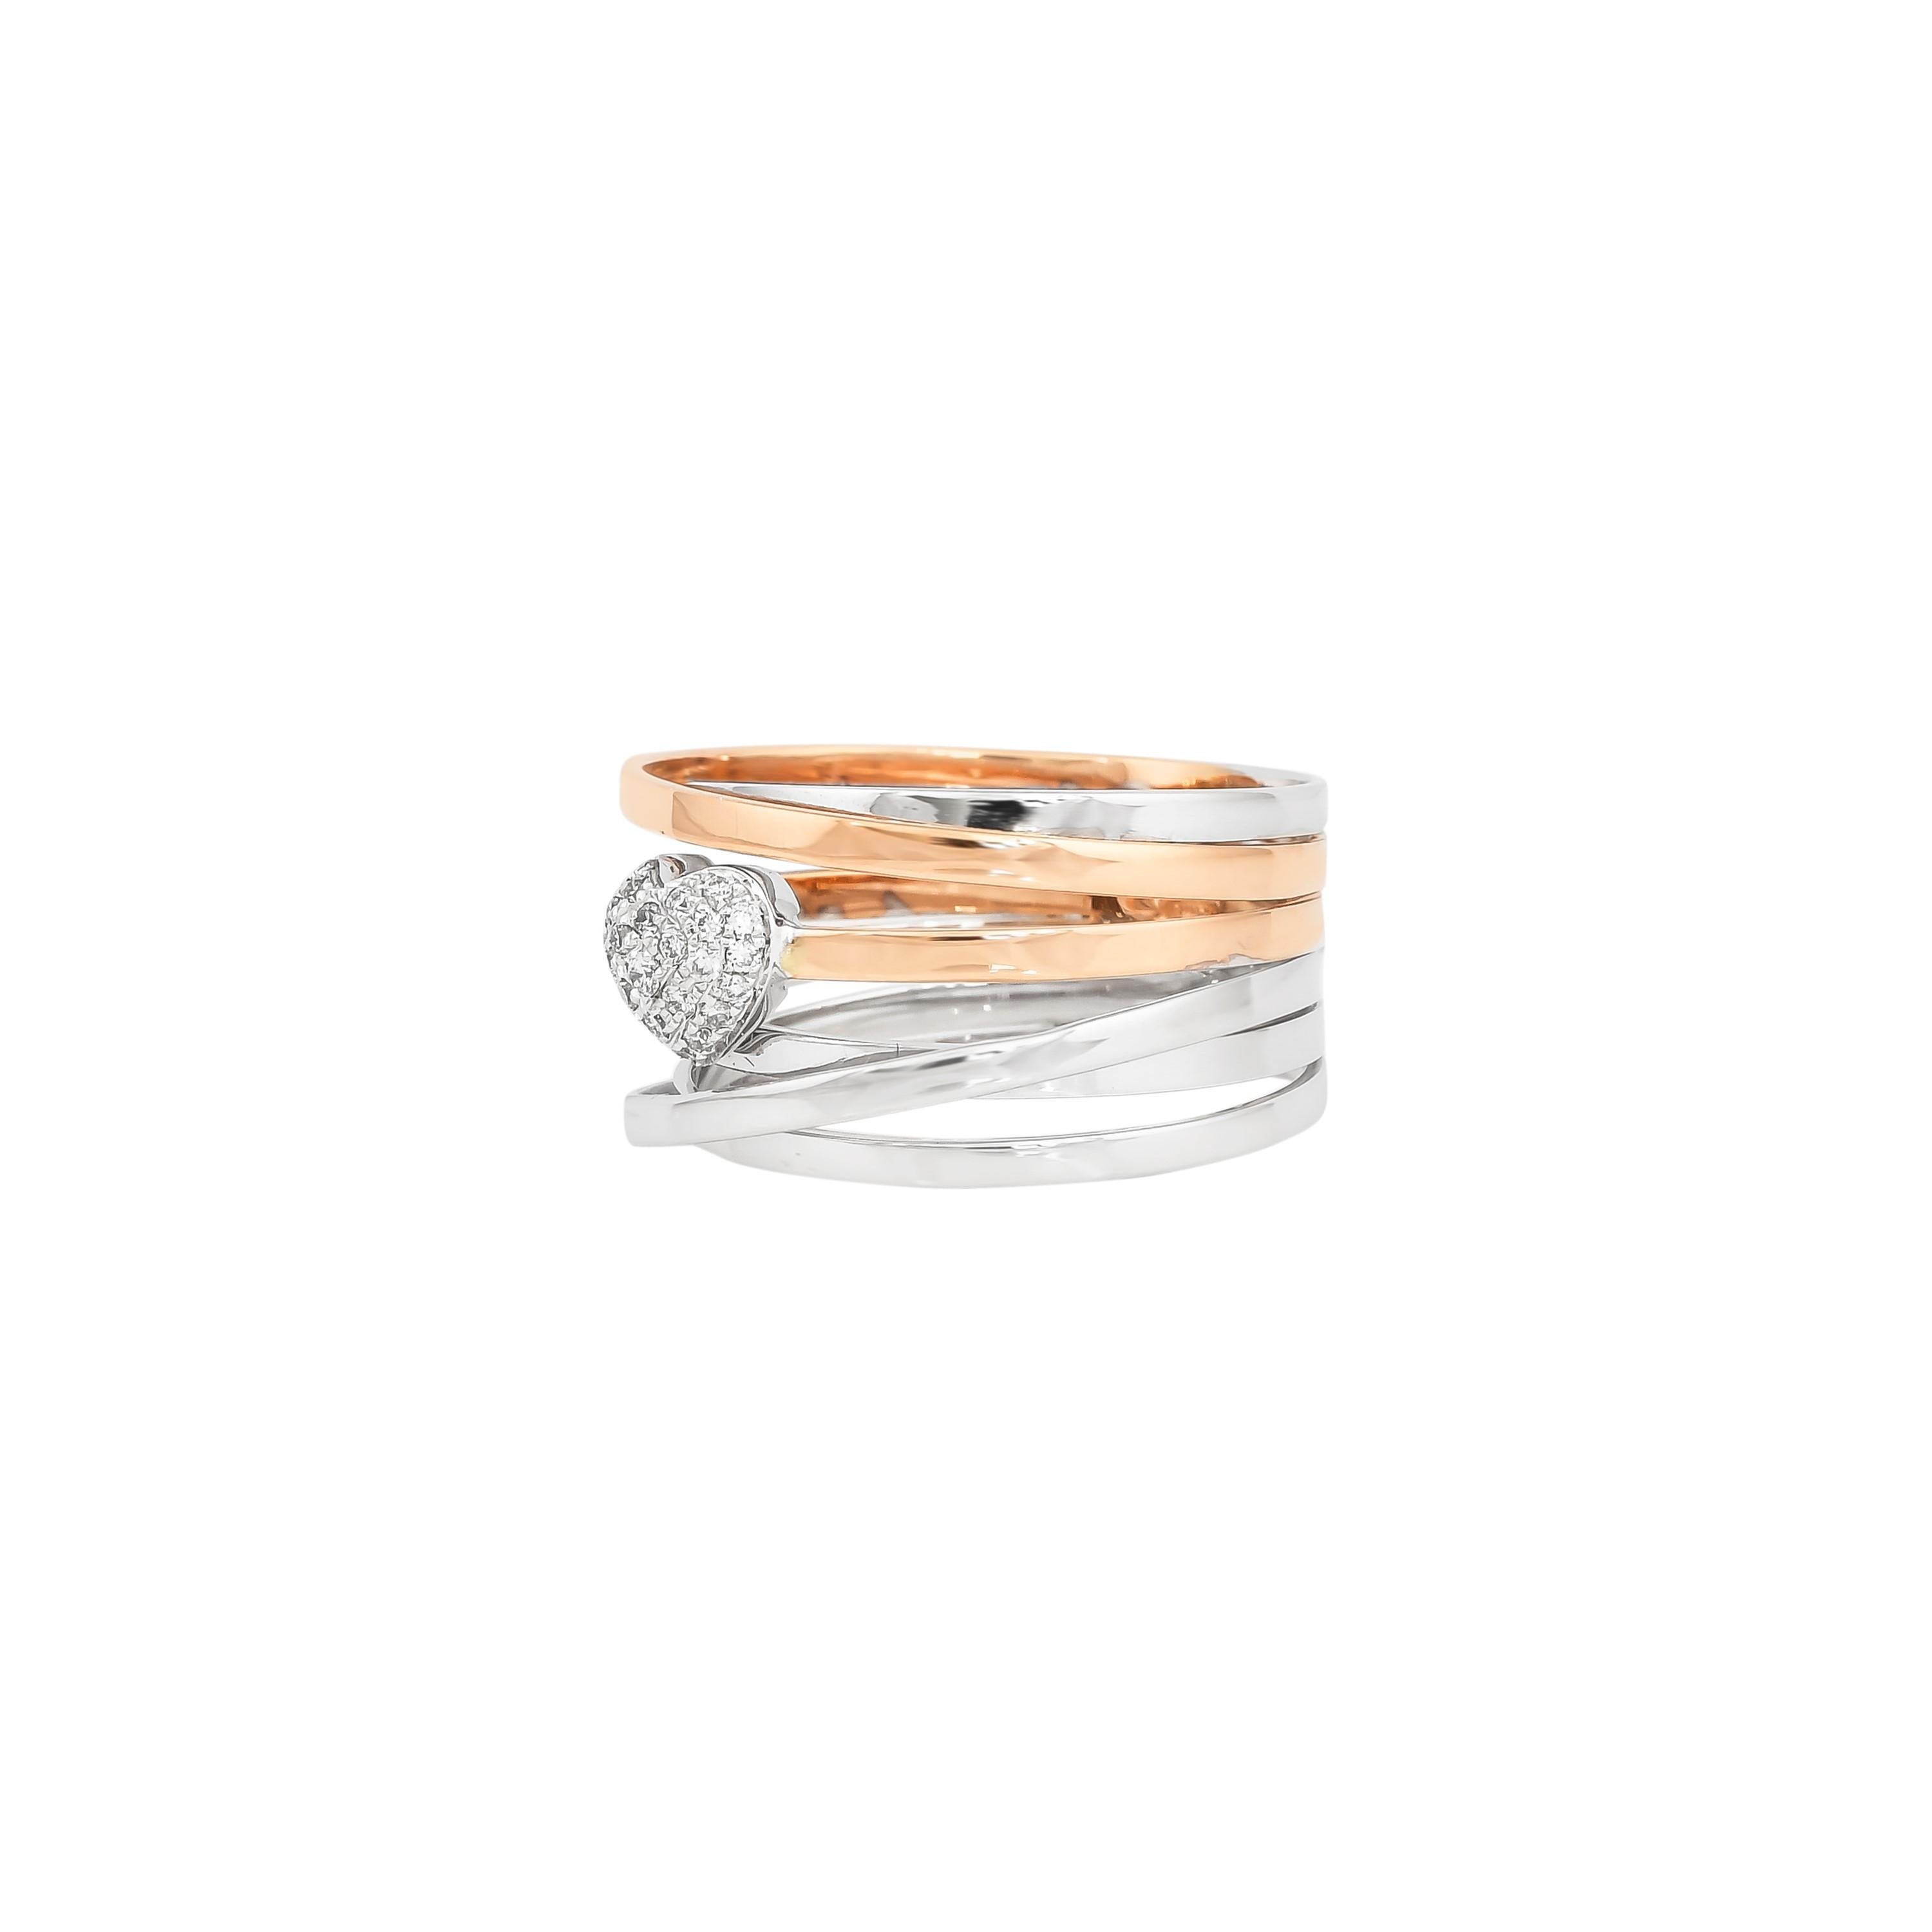 Contemporary 0.118 Carat Diamond Ring in 18 Karat White & Rose Gold For Sale